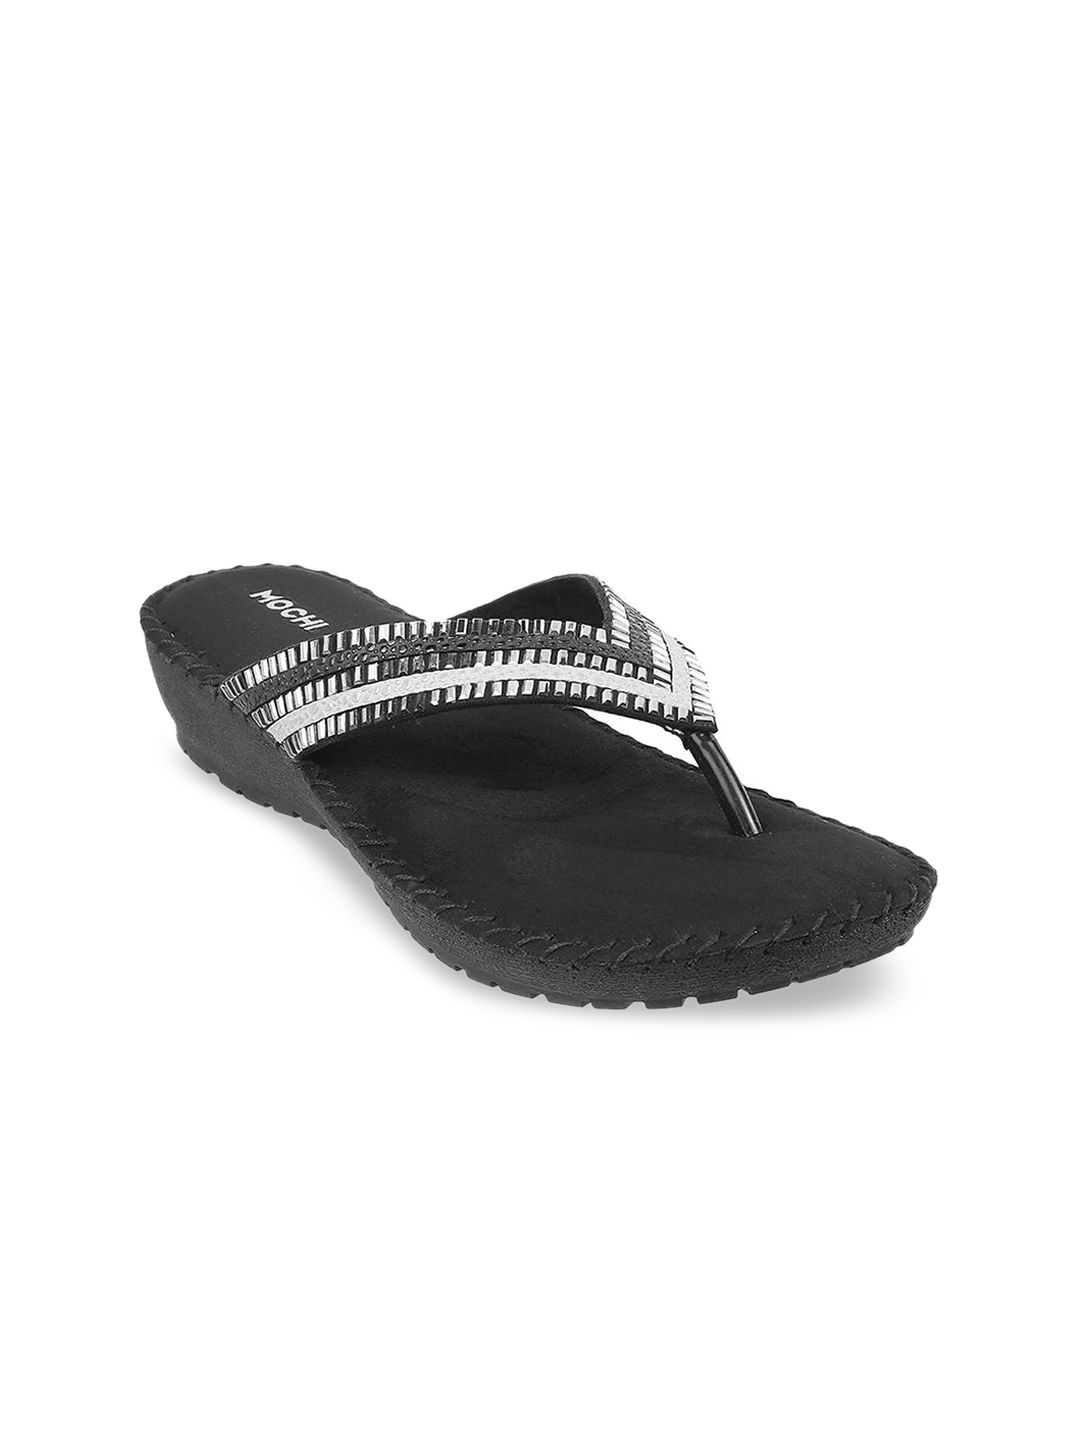 Mochi Black Wedge Sandals Price in India